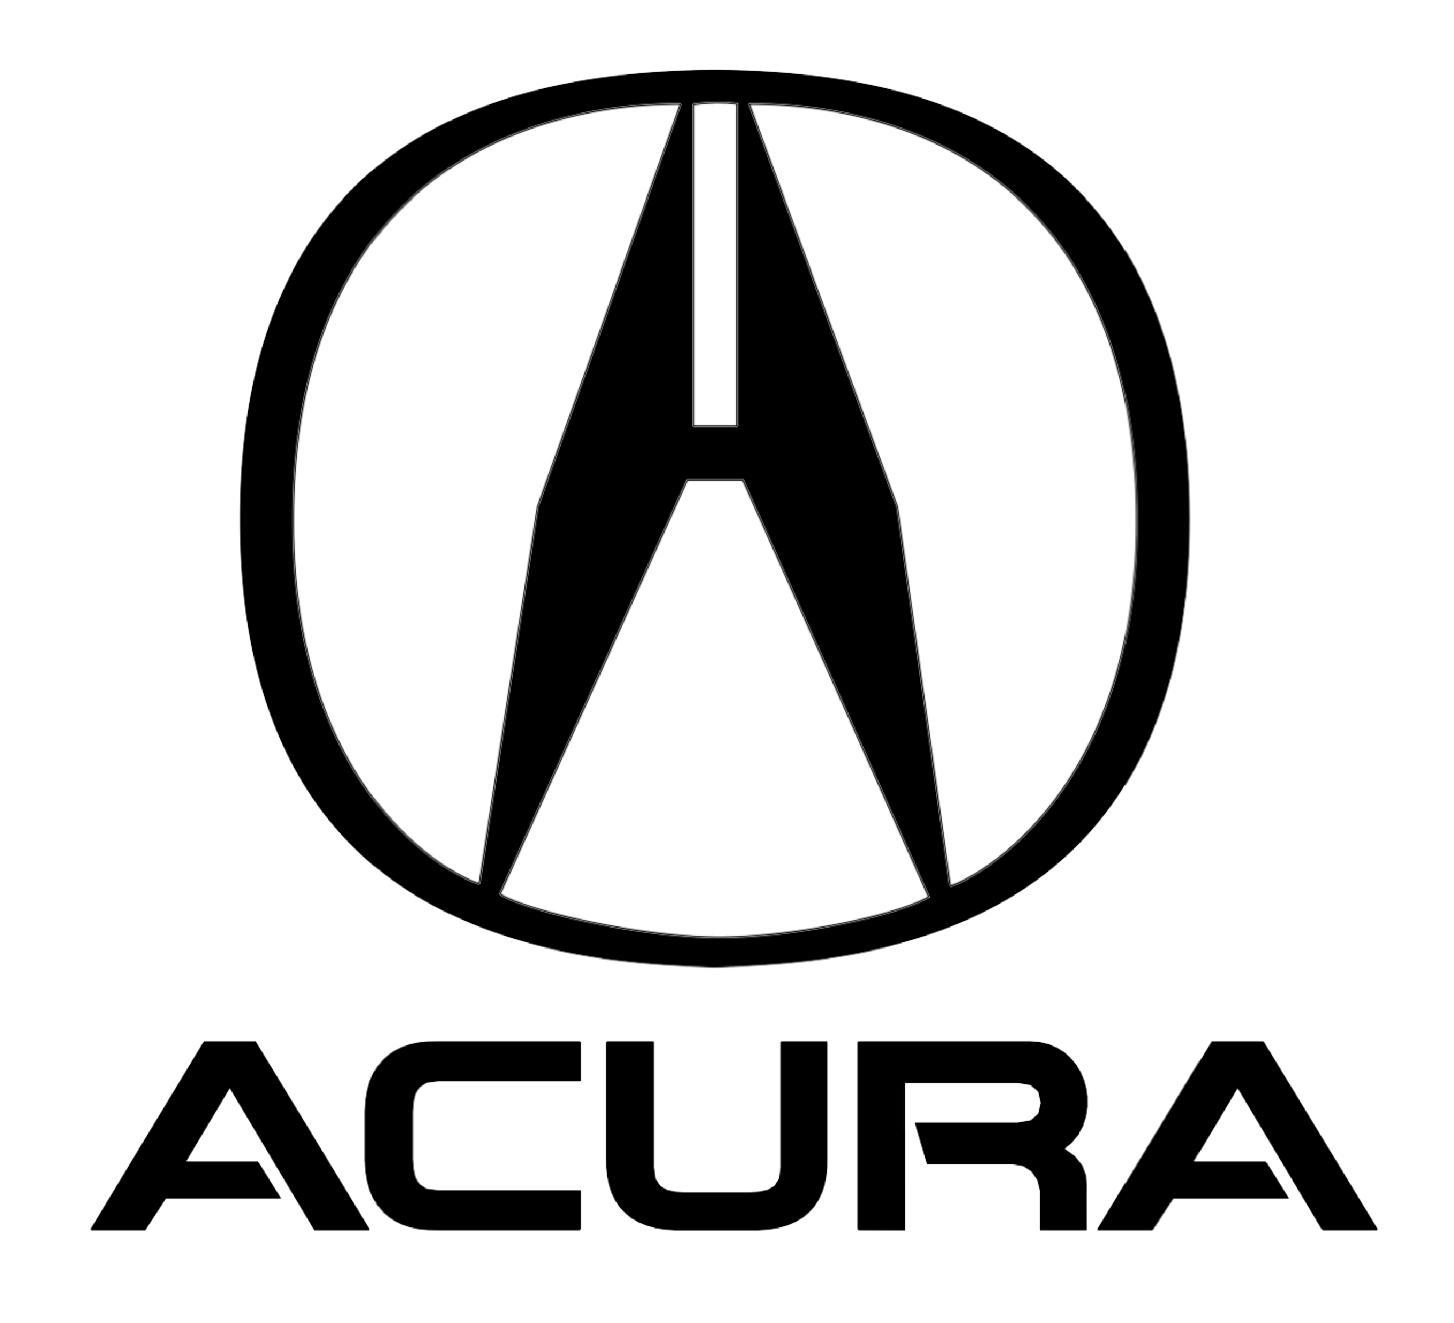 Old Acura Logo - Acura Logo, Acura Car Symbol Meaning and History | Car Brand Names.com